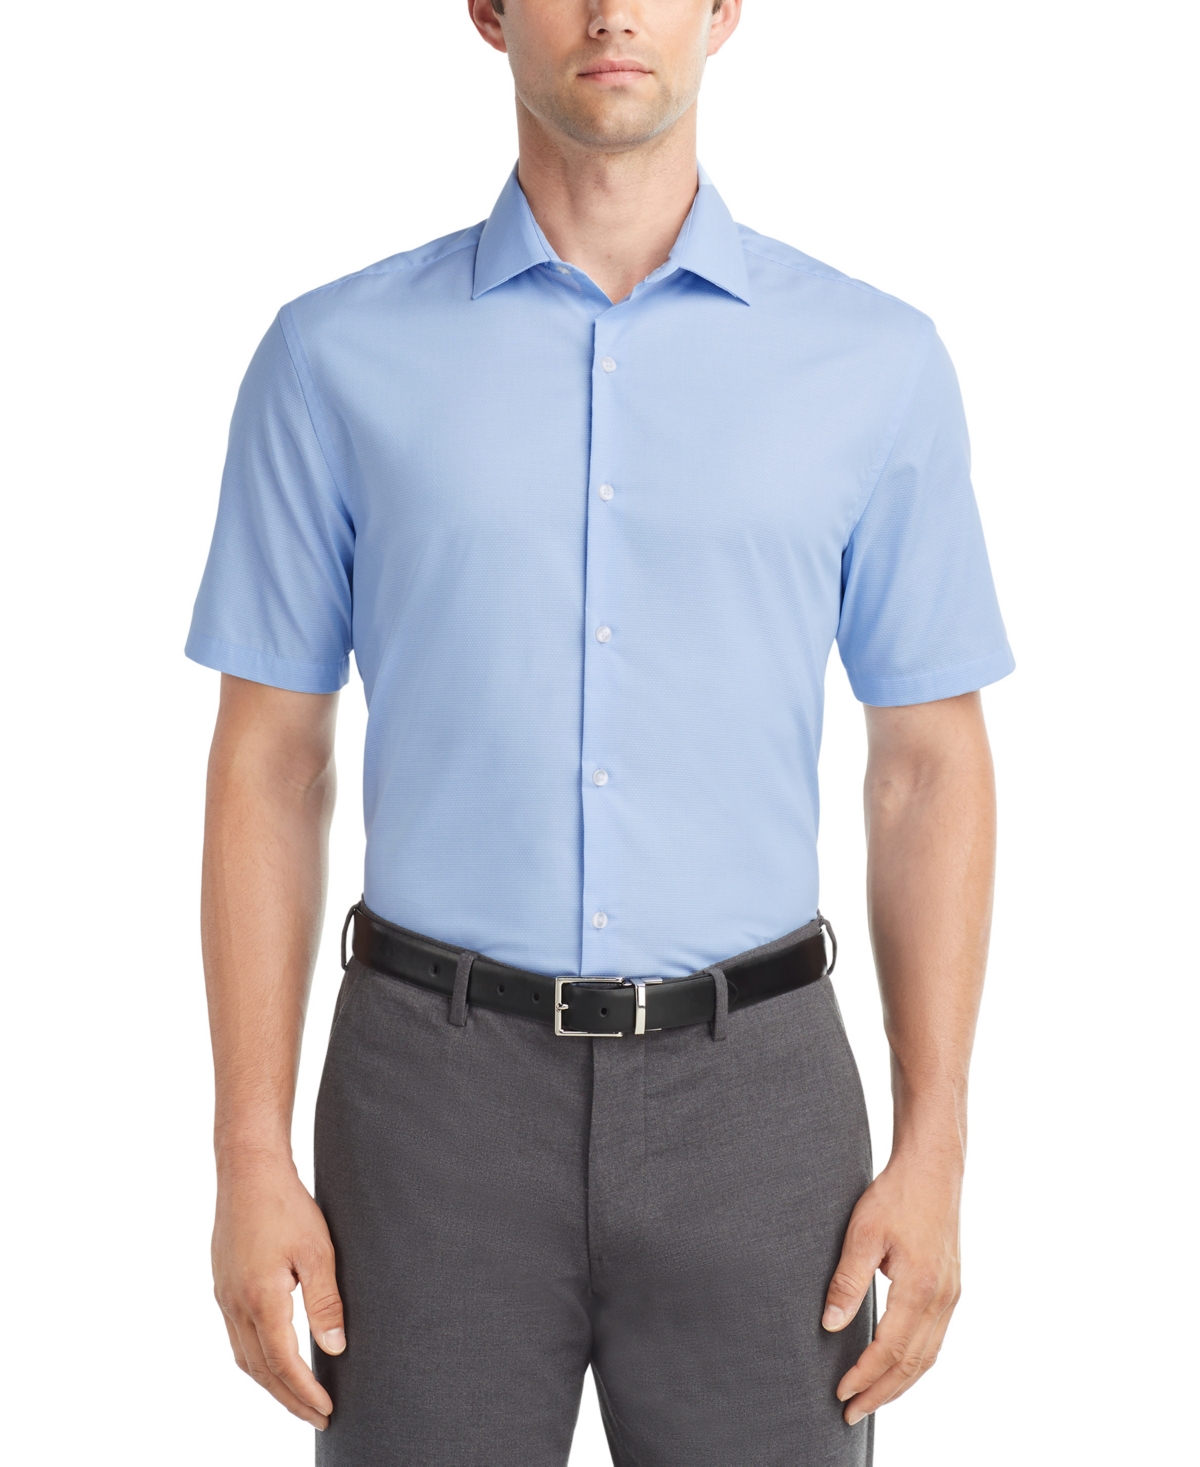 Men's Slim-Fit Flex Collar Short-Sleeve Dress Shirt - White